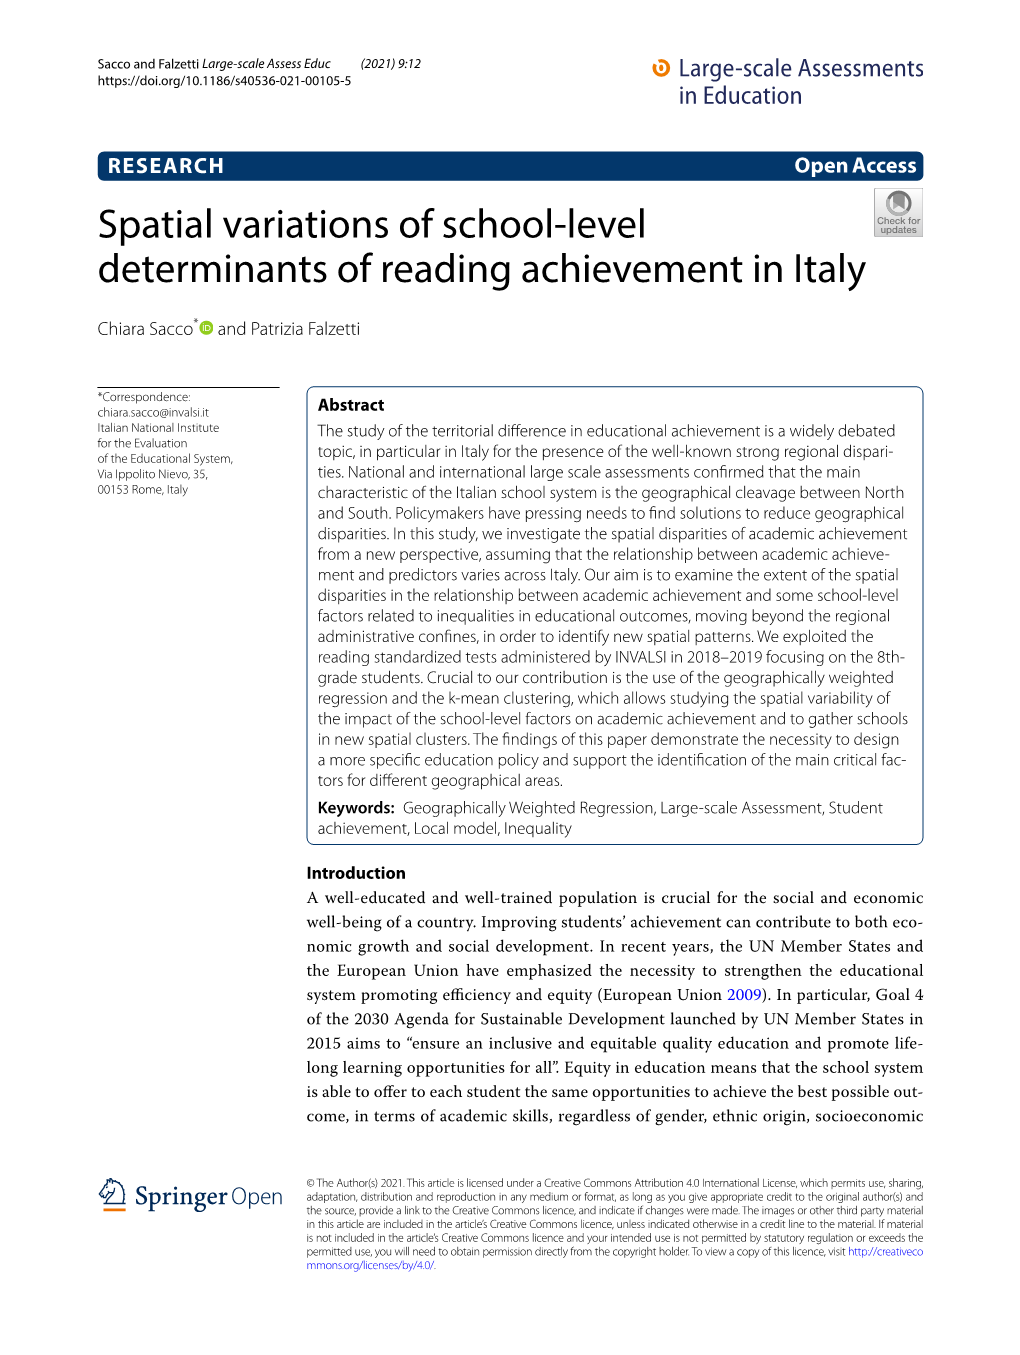 Spatial Variations of School-Level Determinants of Reading